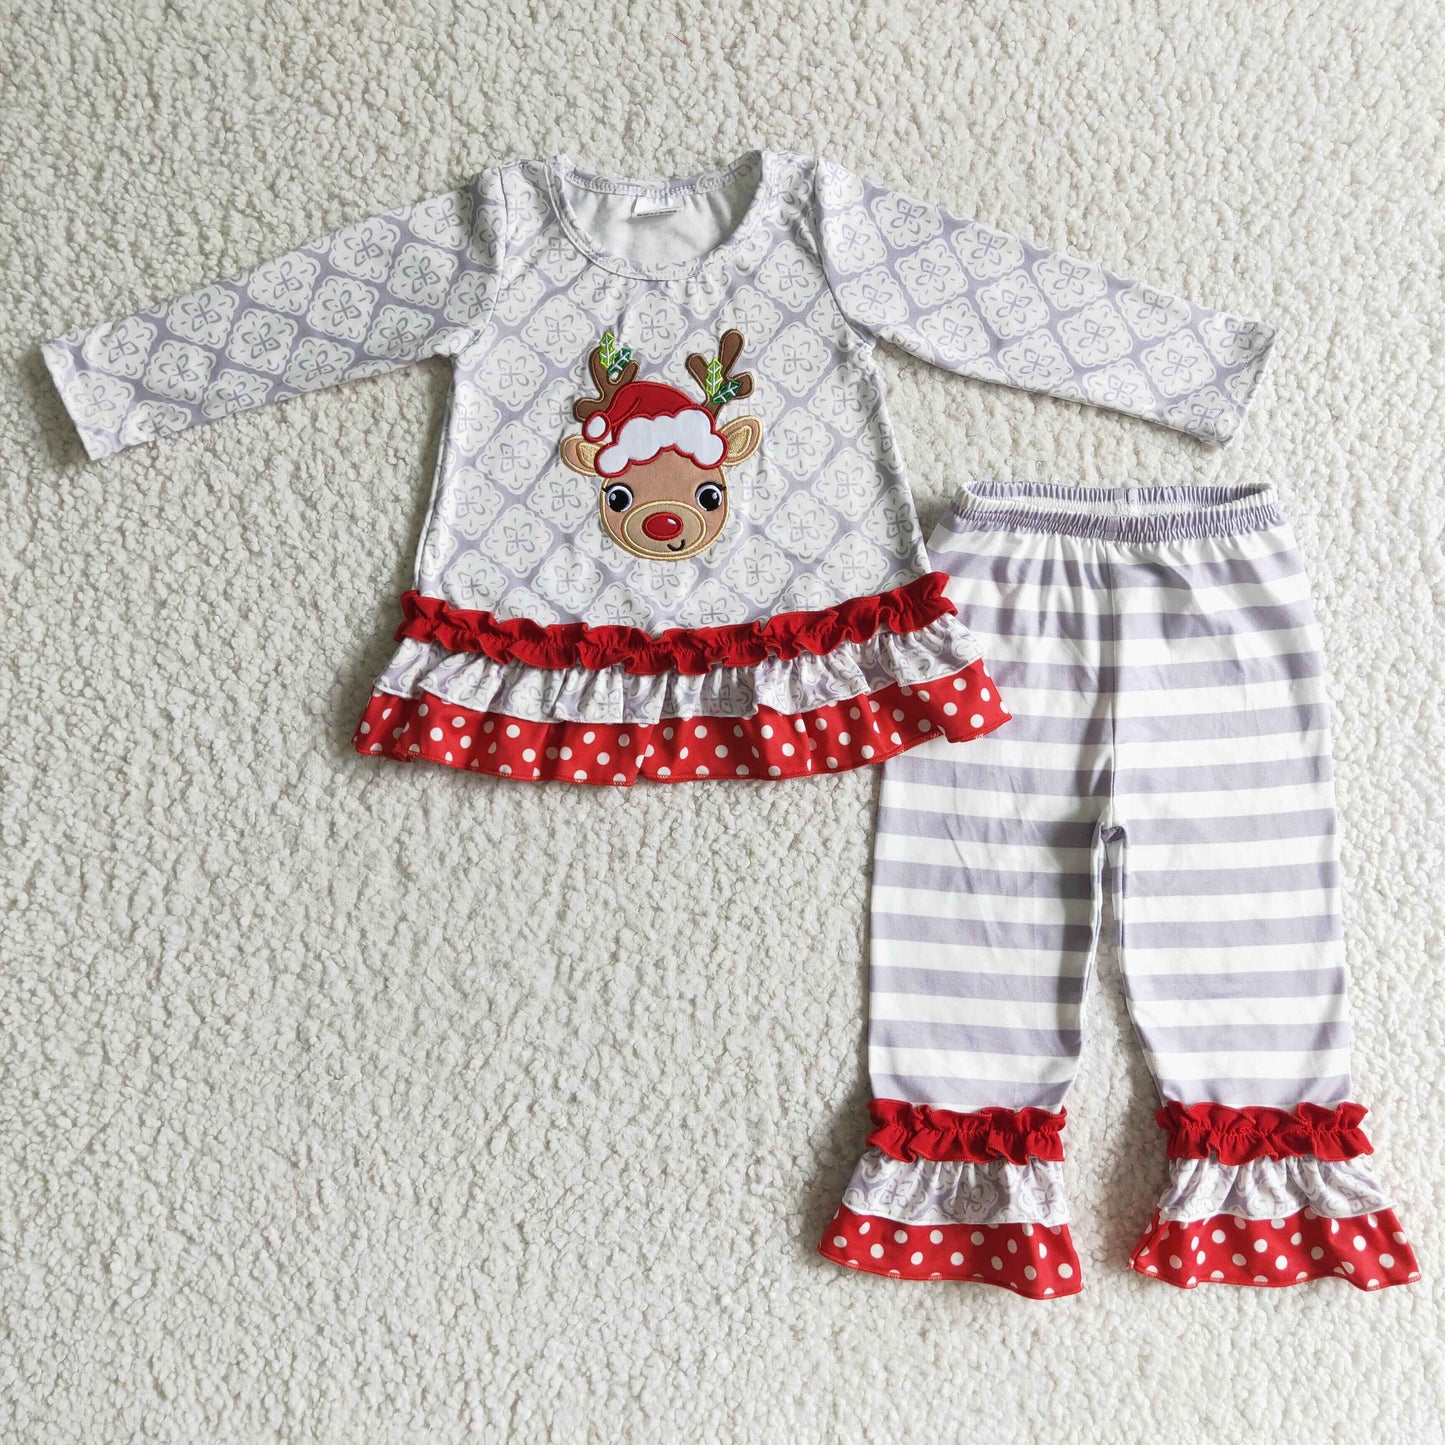 Reindeer embroidery ruffle pants girl Christmas outfits